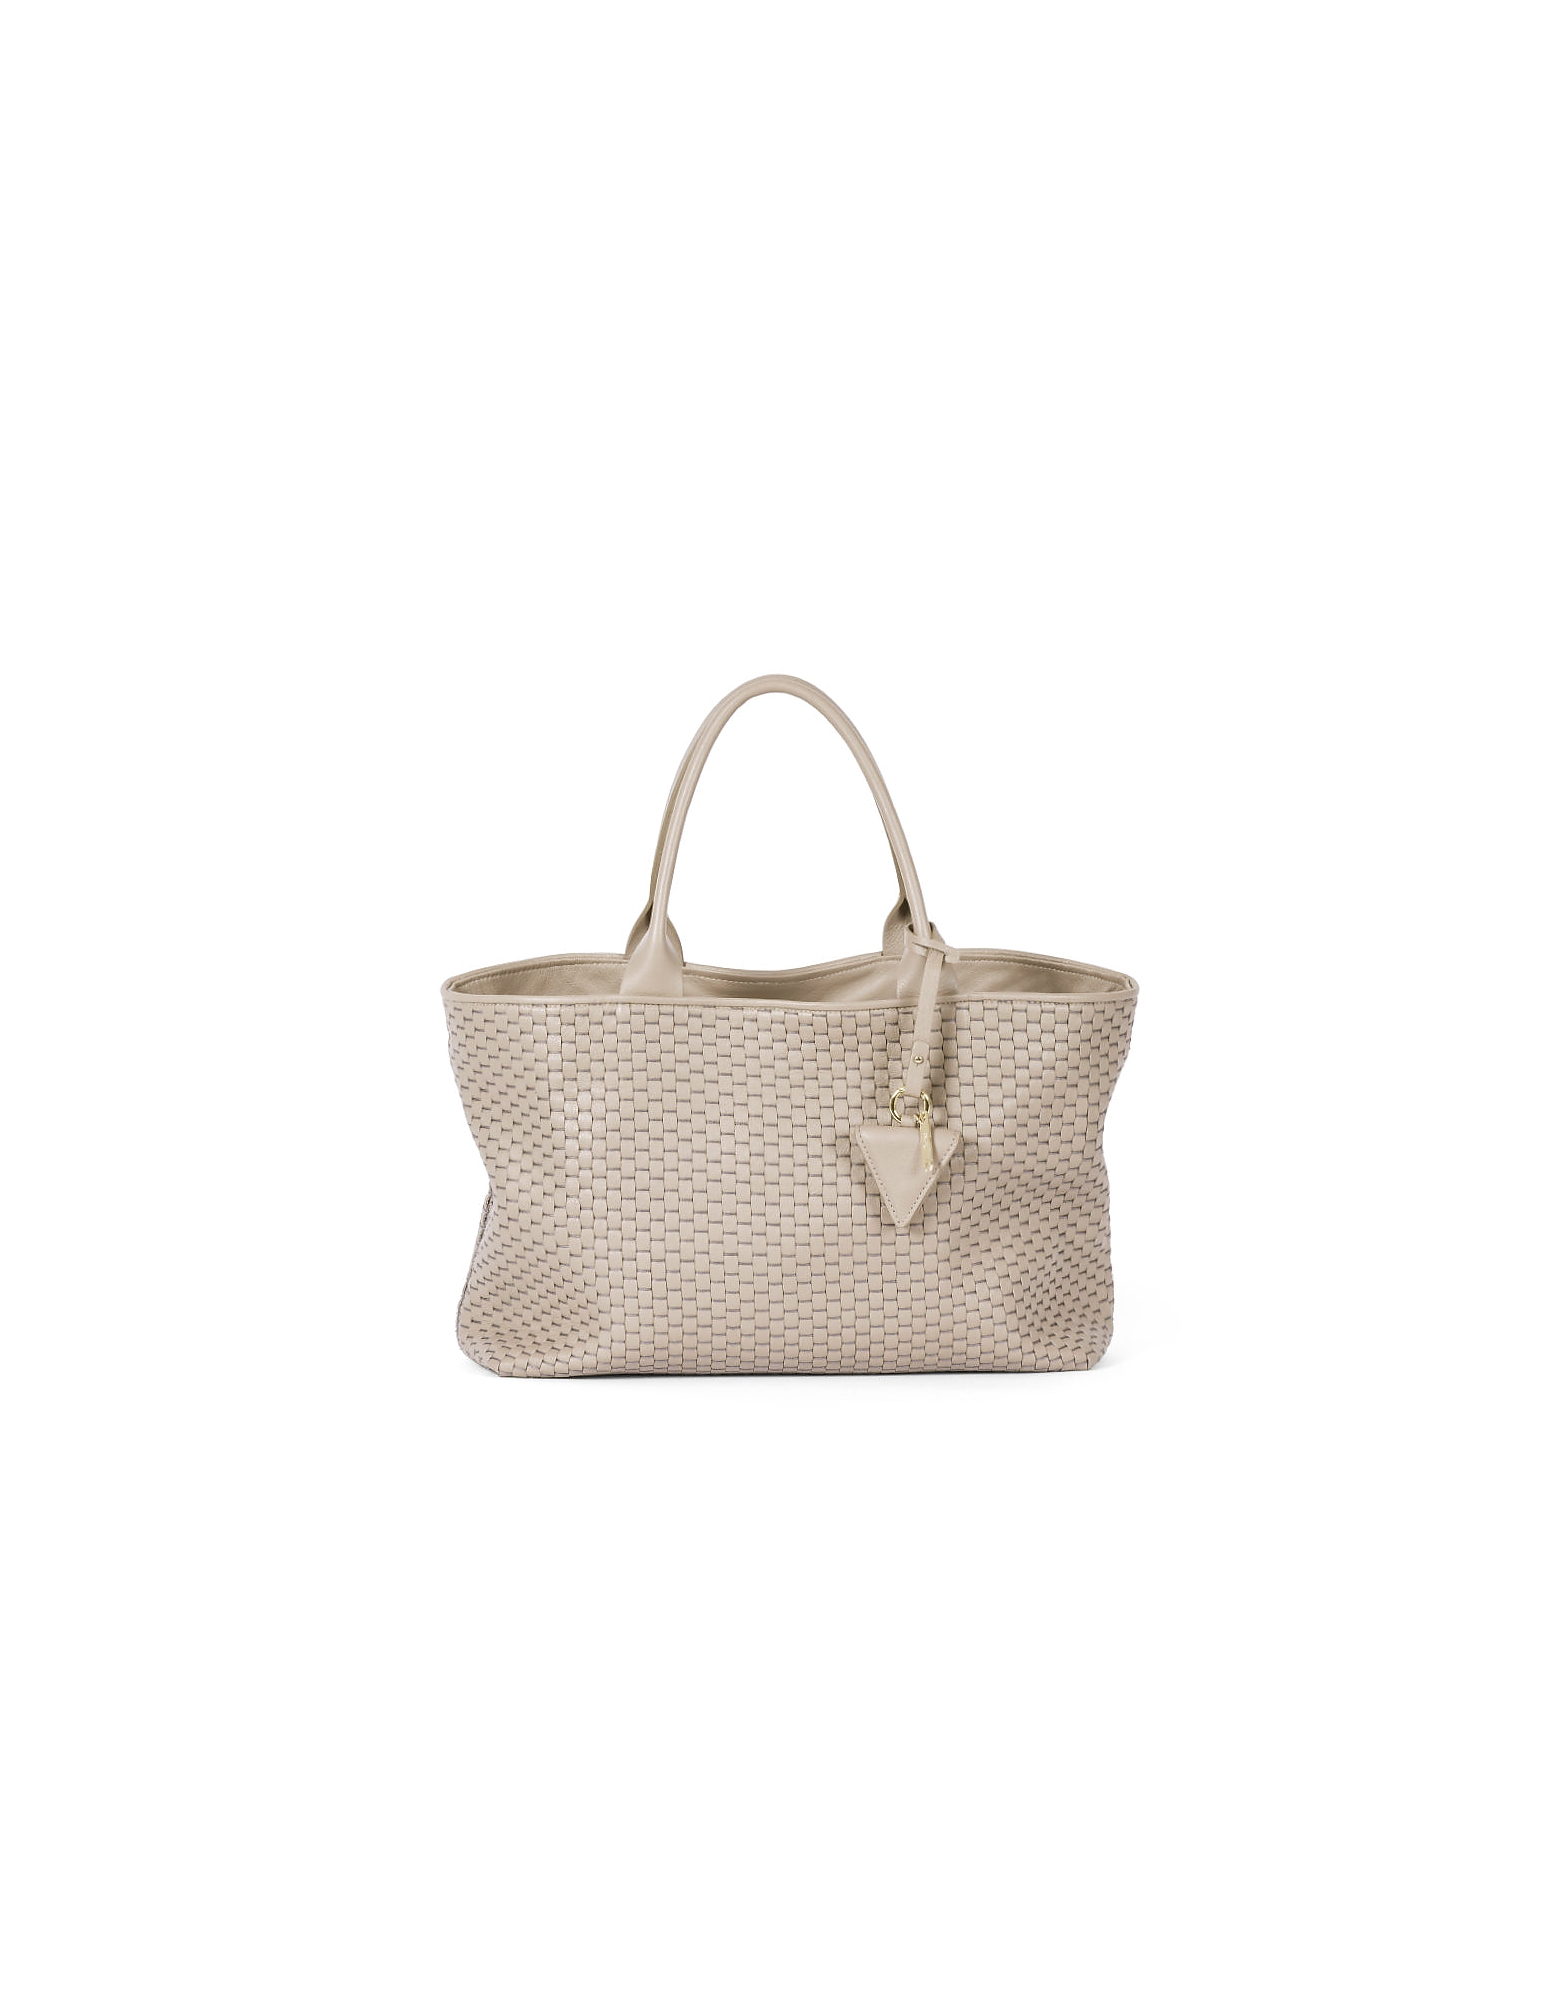 Parise Designer Handbags Shp-60-m - Woven Leather Tote Bag In Noir